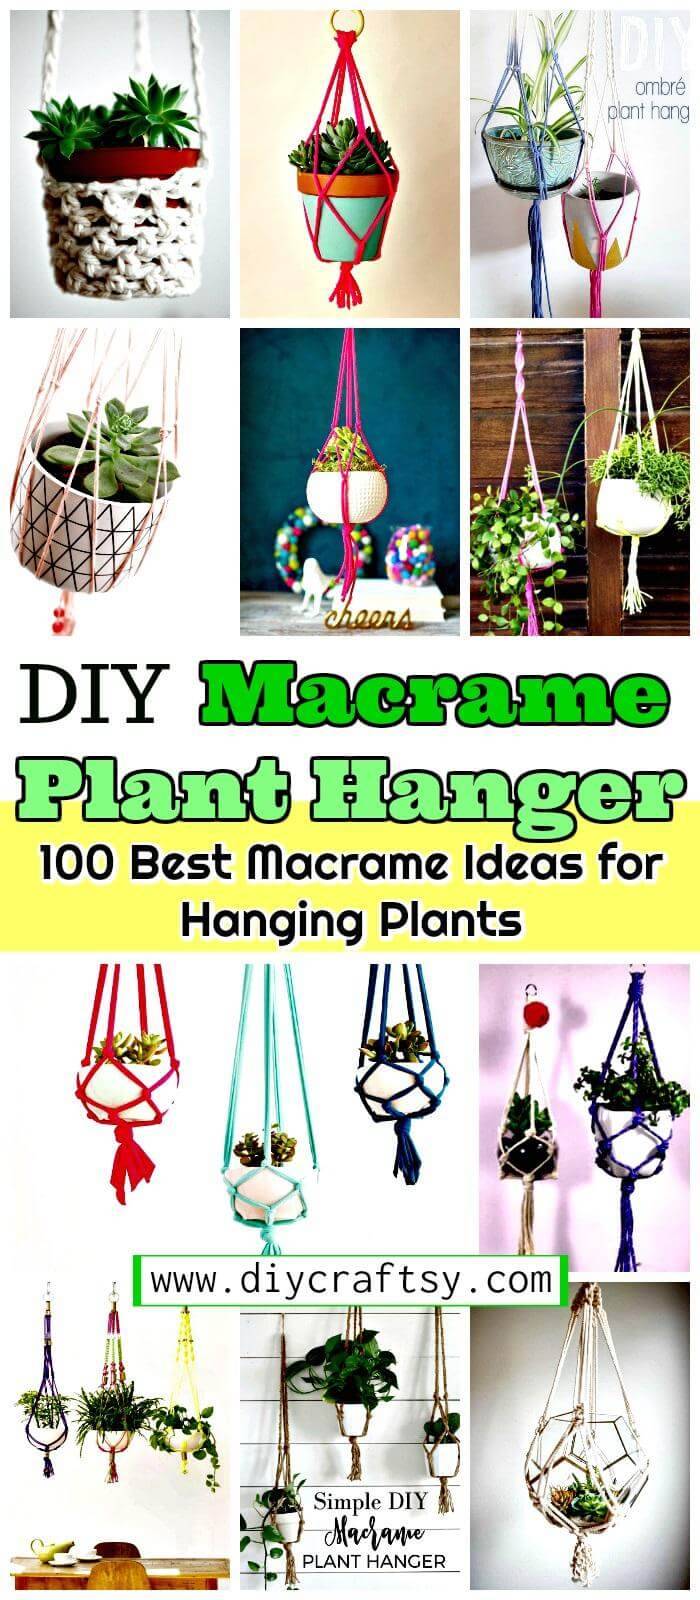 Macrame Plant Hanger - 100 Best Macrame Ideas for Hanging Plants - DIY Hanging Planters